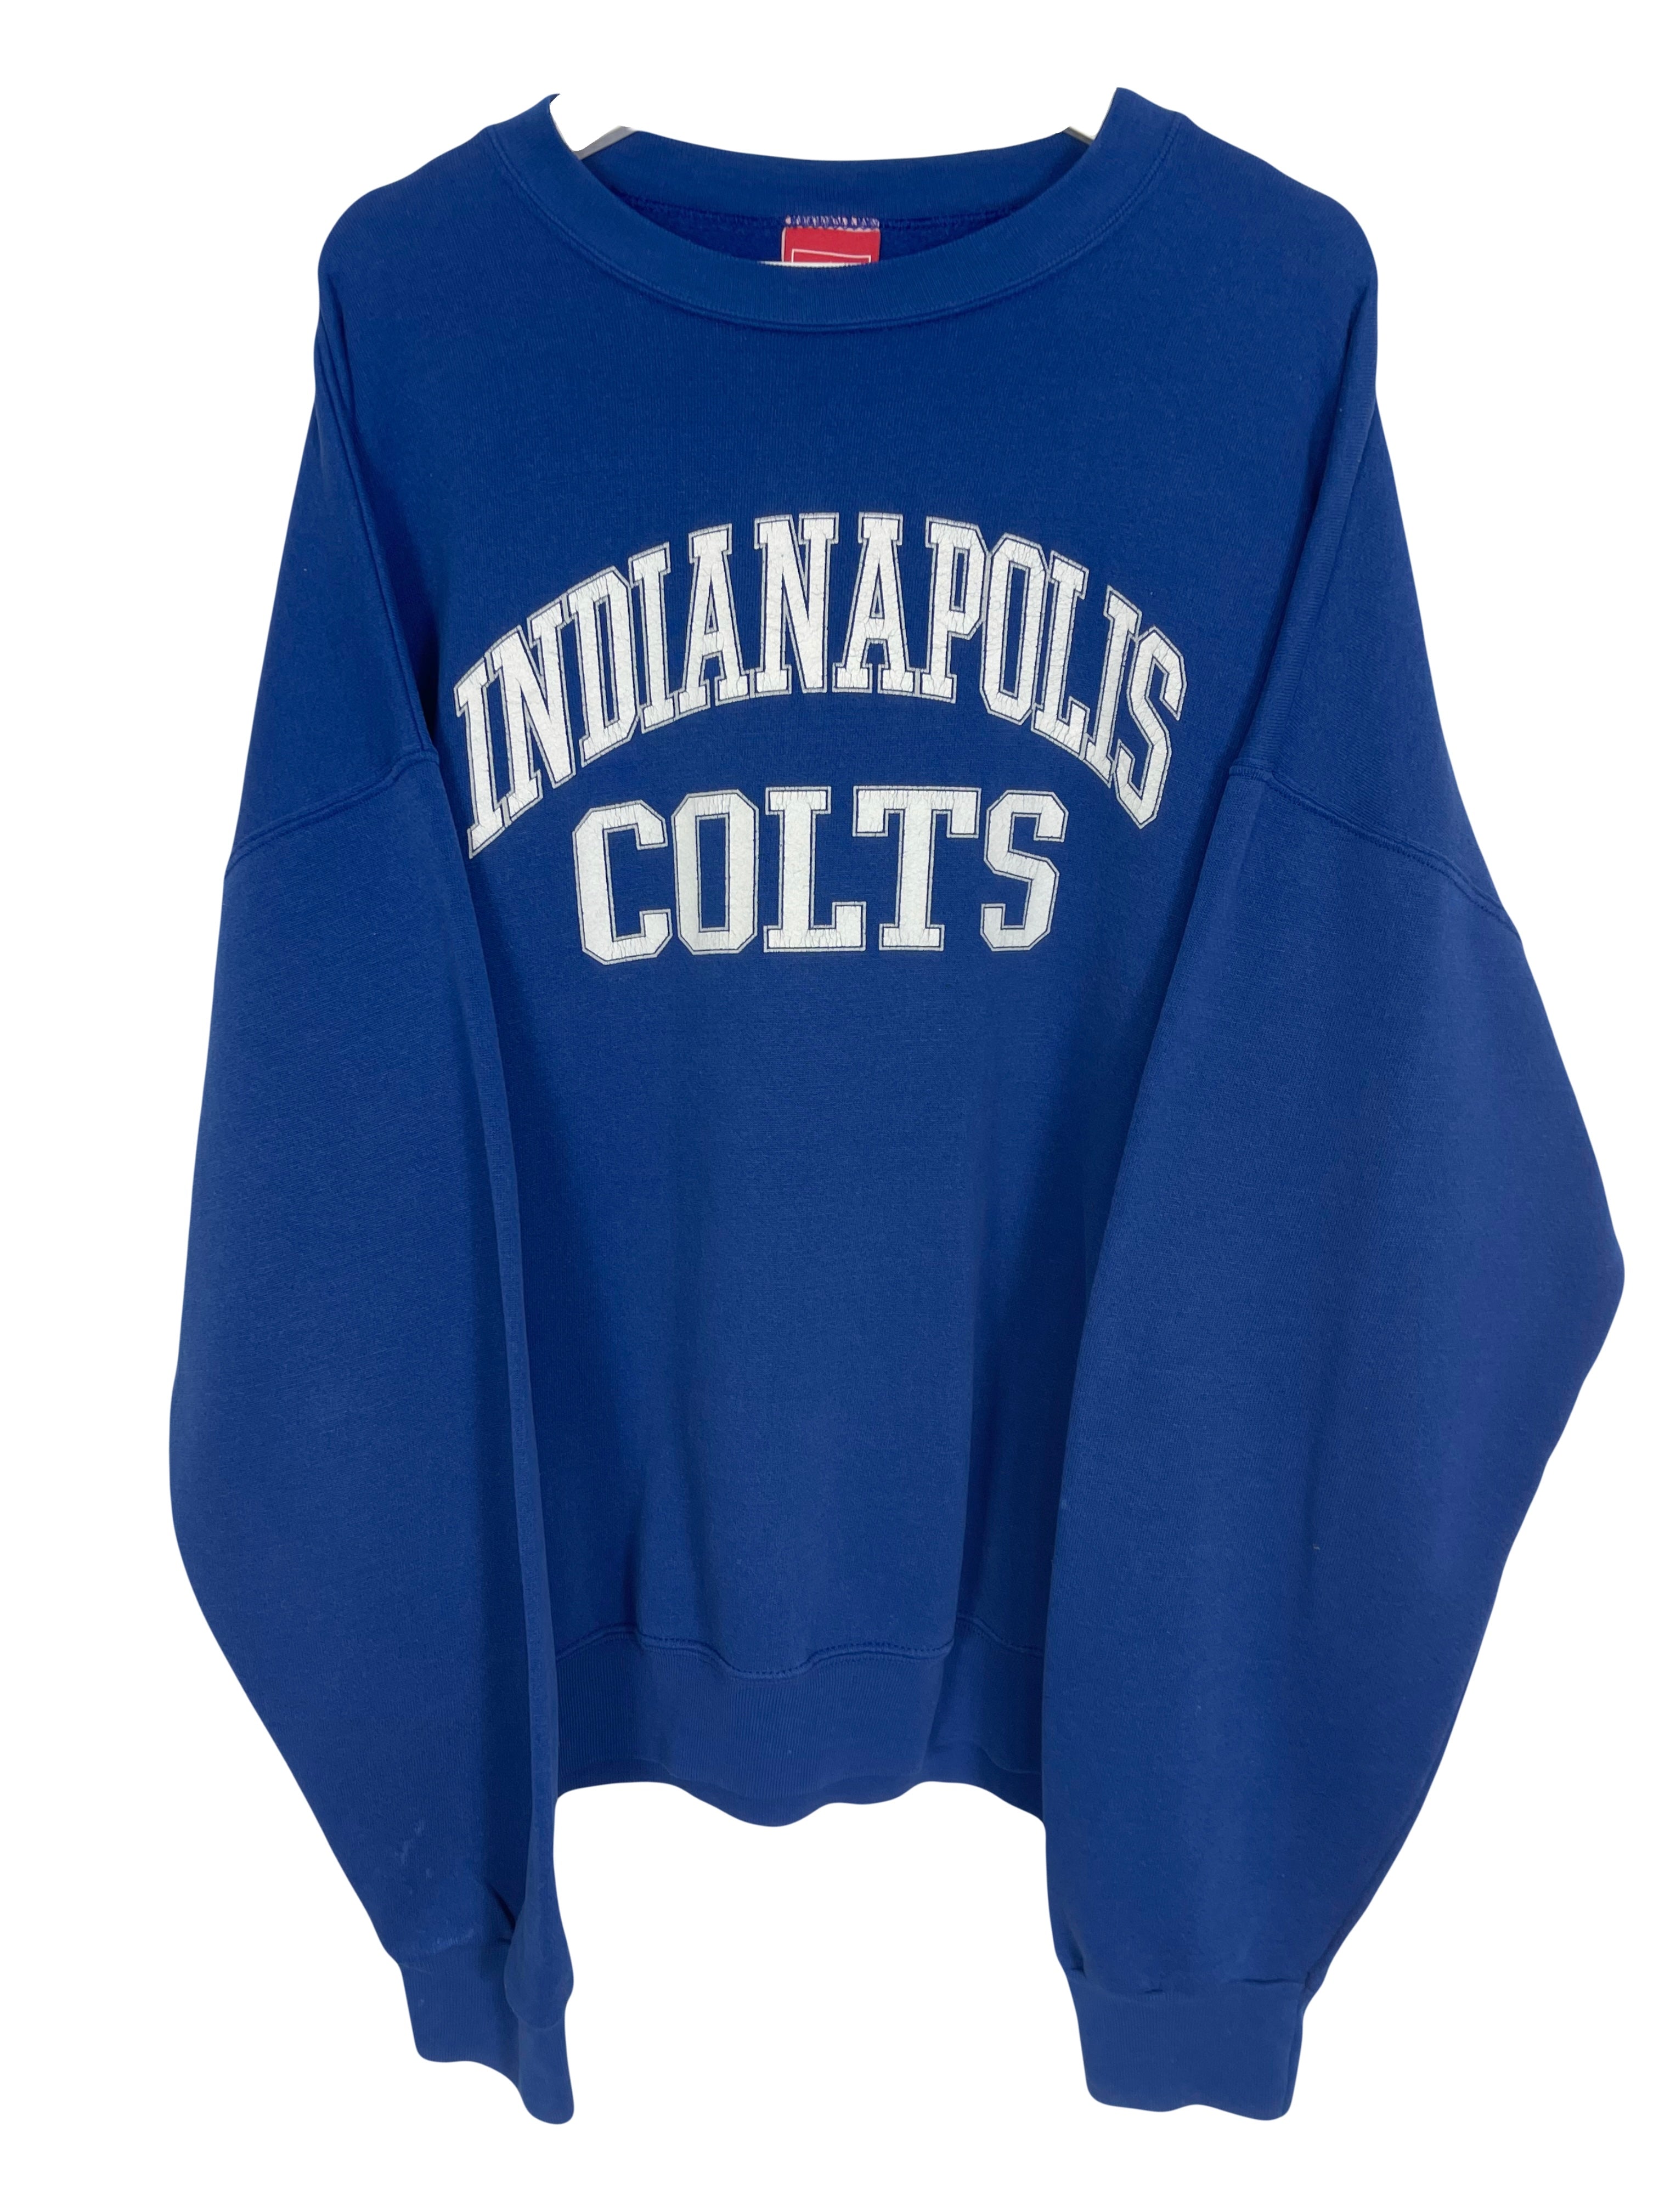  Sweatshirt NFL Sweat - Indianapolis Colts - XXL - PLOMOSTORE